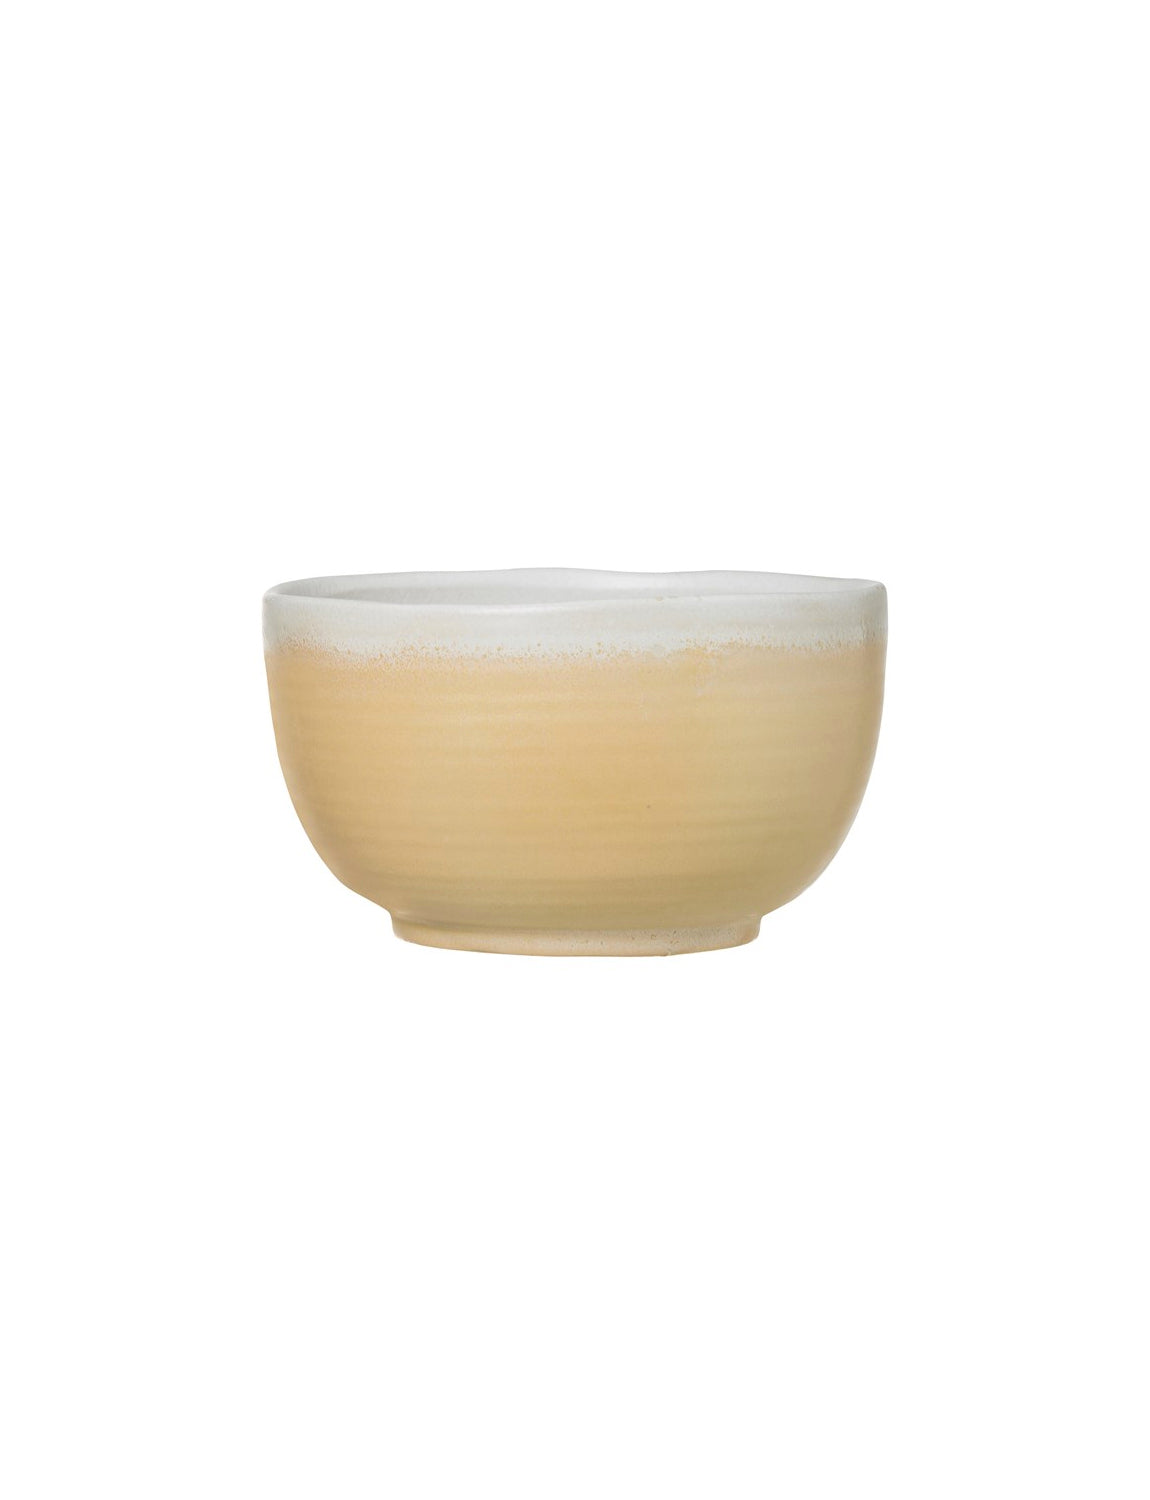 Reactive Glaze Stoneware Bowl, cream 7"